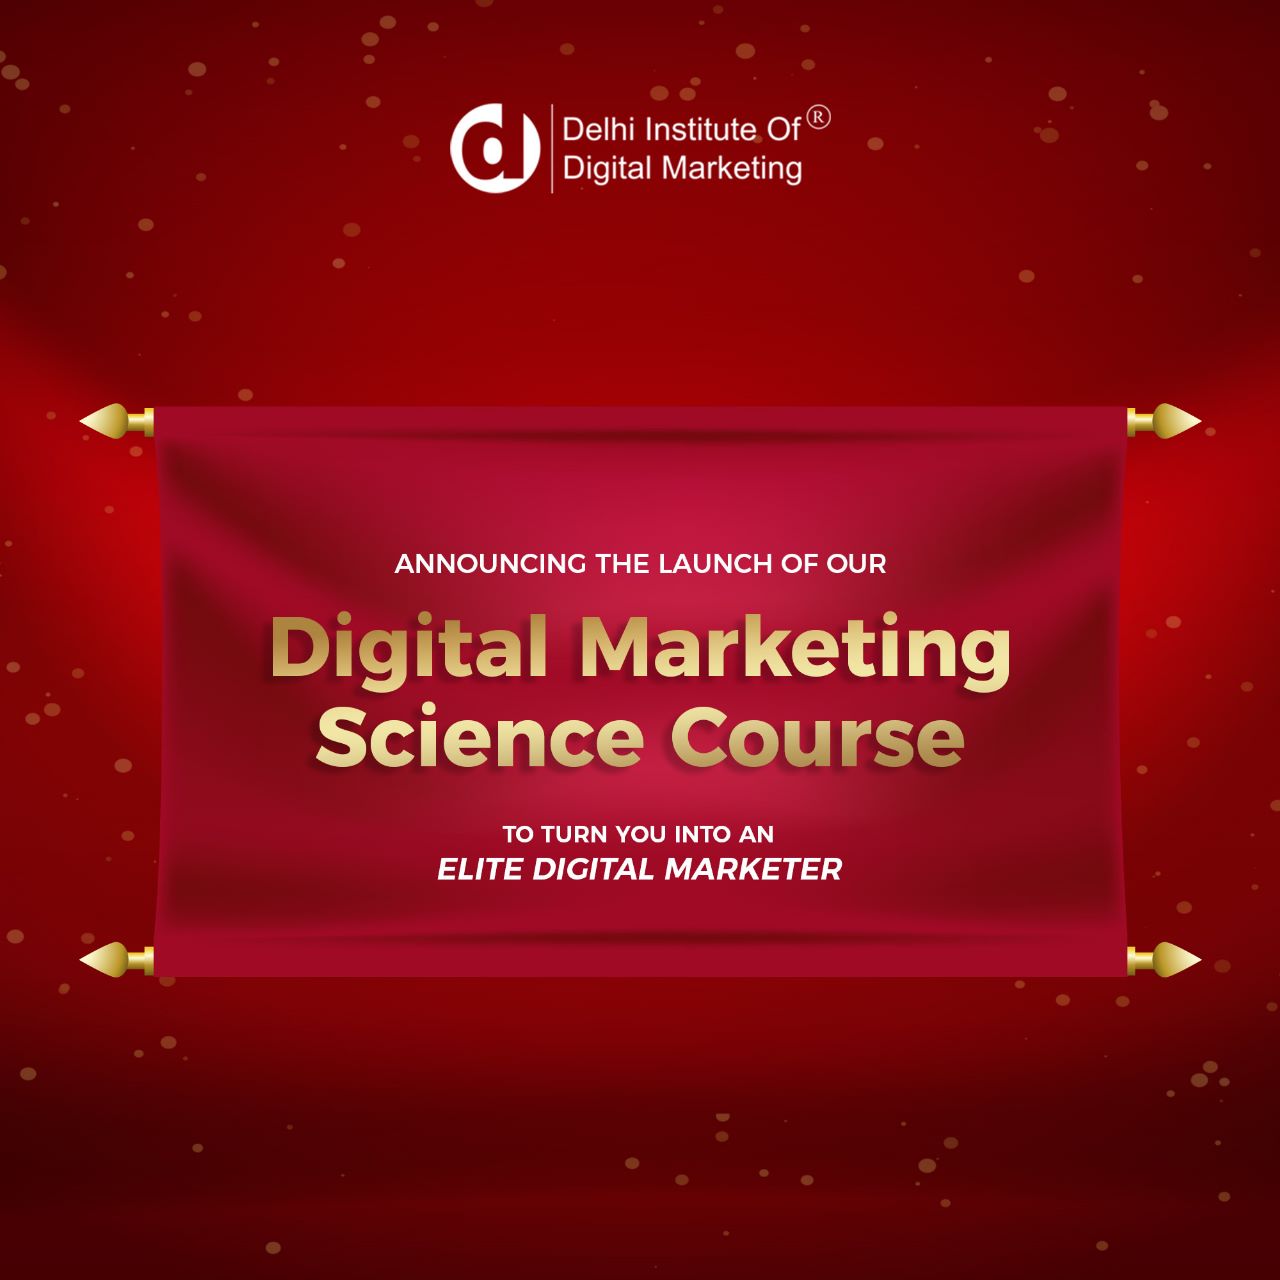 DIDM’s Digital Marketing Science Course